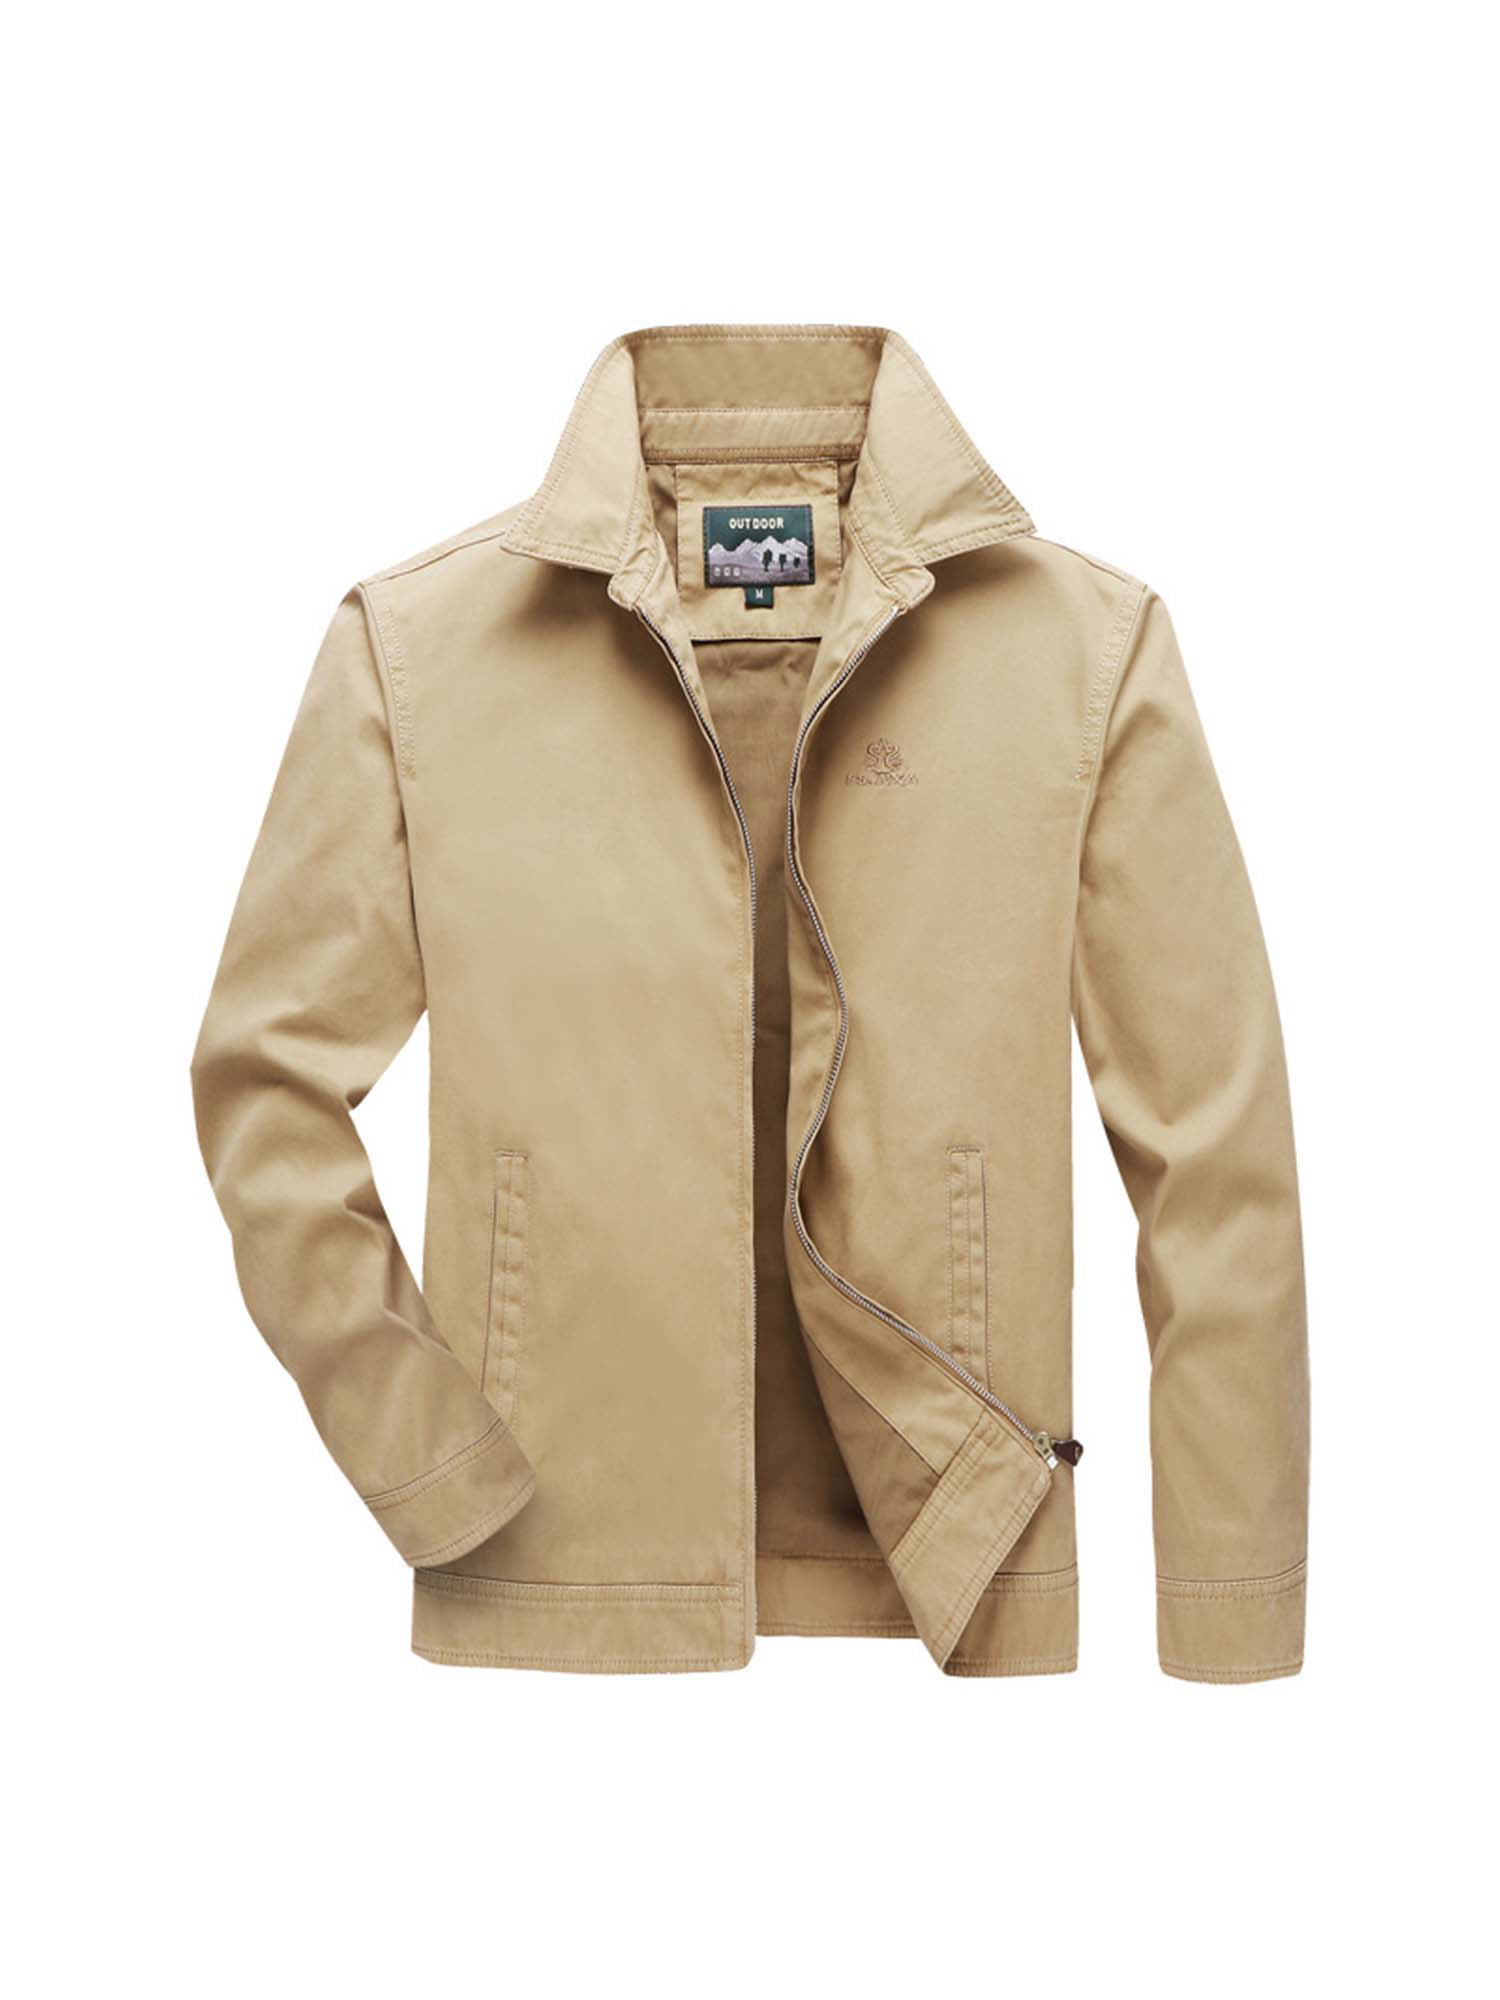 YUNY Men Plus-Size Stand Collar Zip Button Pocket Warm Thick Outwear Jacket Khaki 2XL 